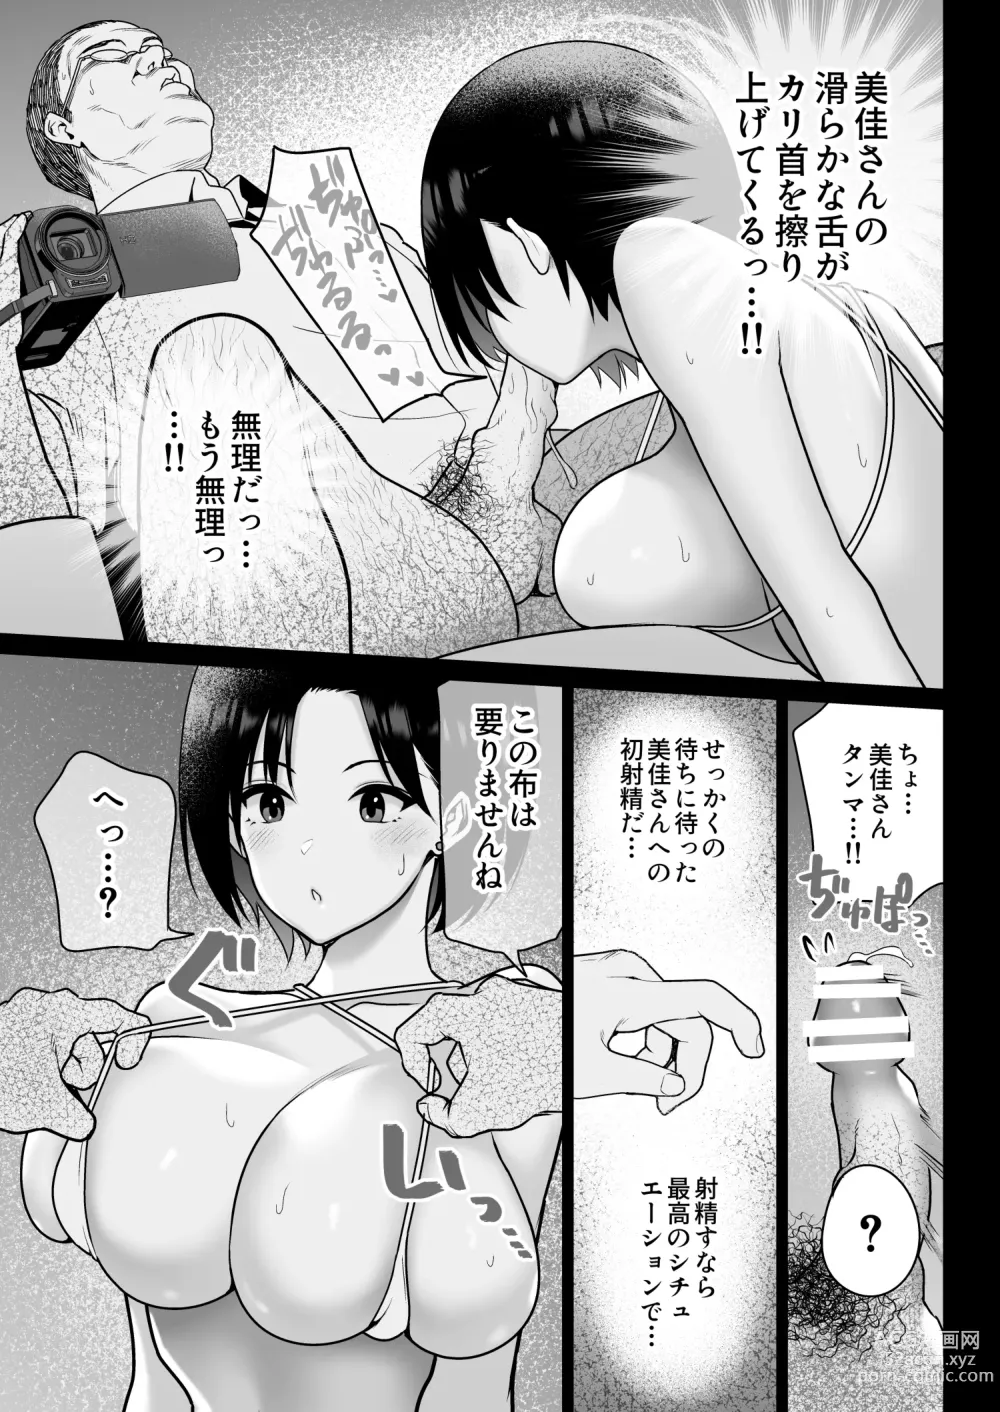 Page 22 of doujinshi Oshidori Fuufu Yakitorare